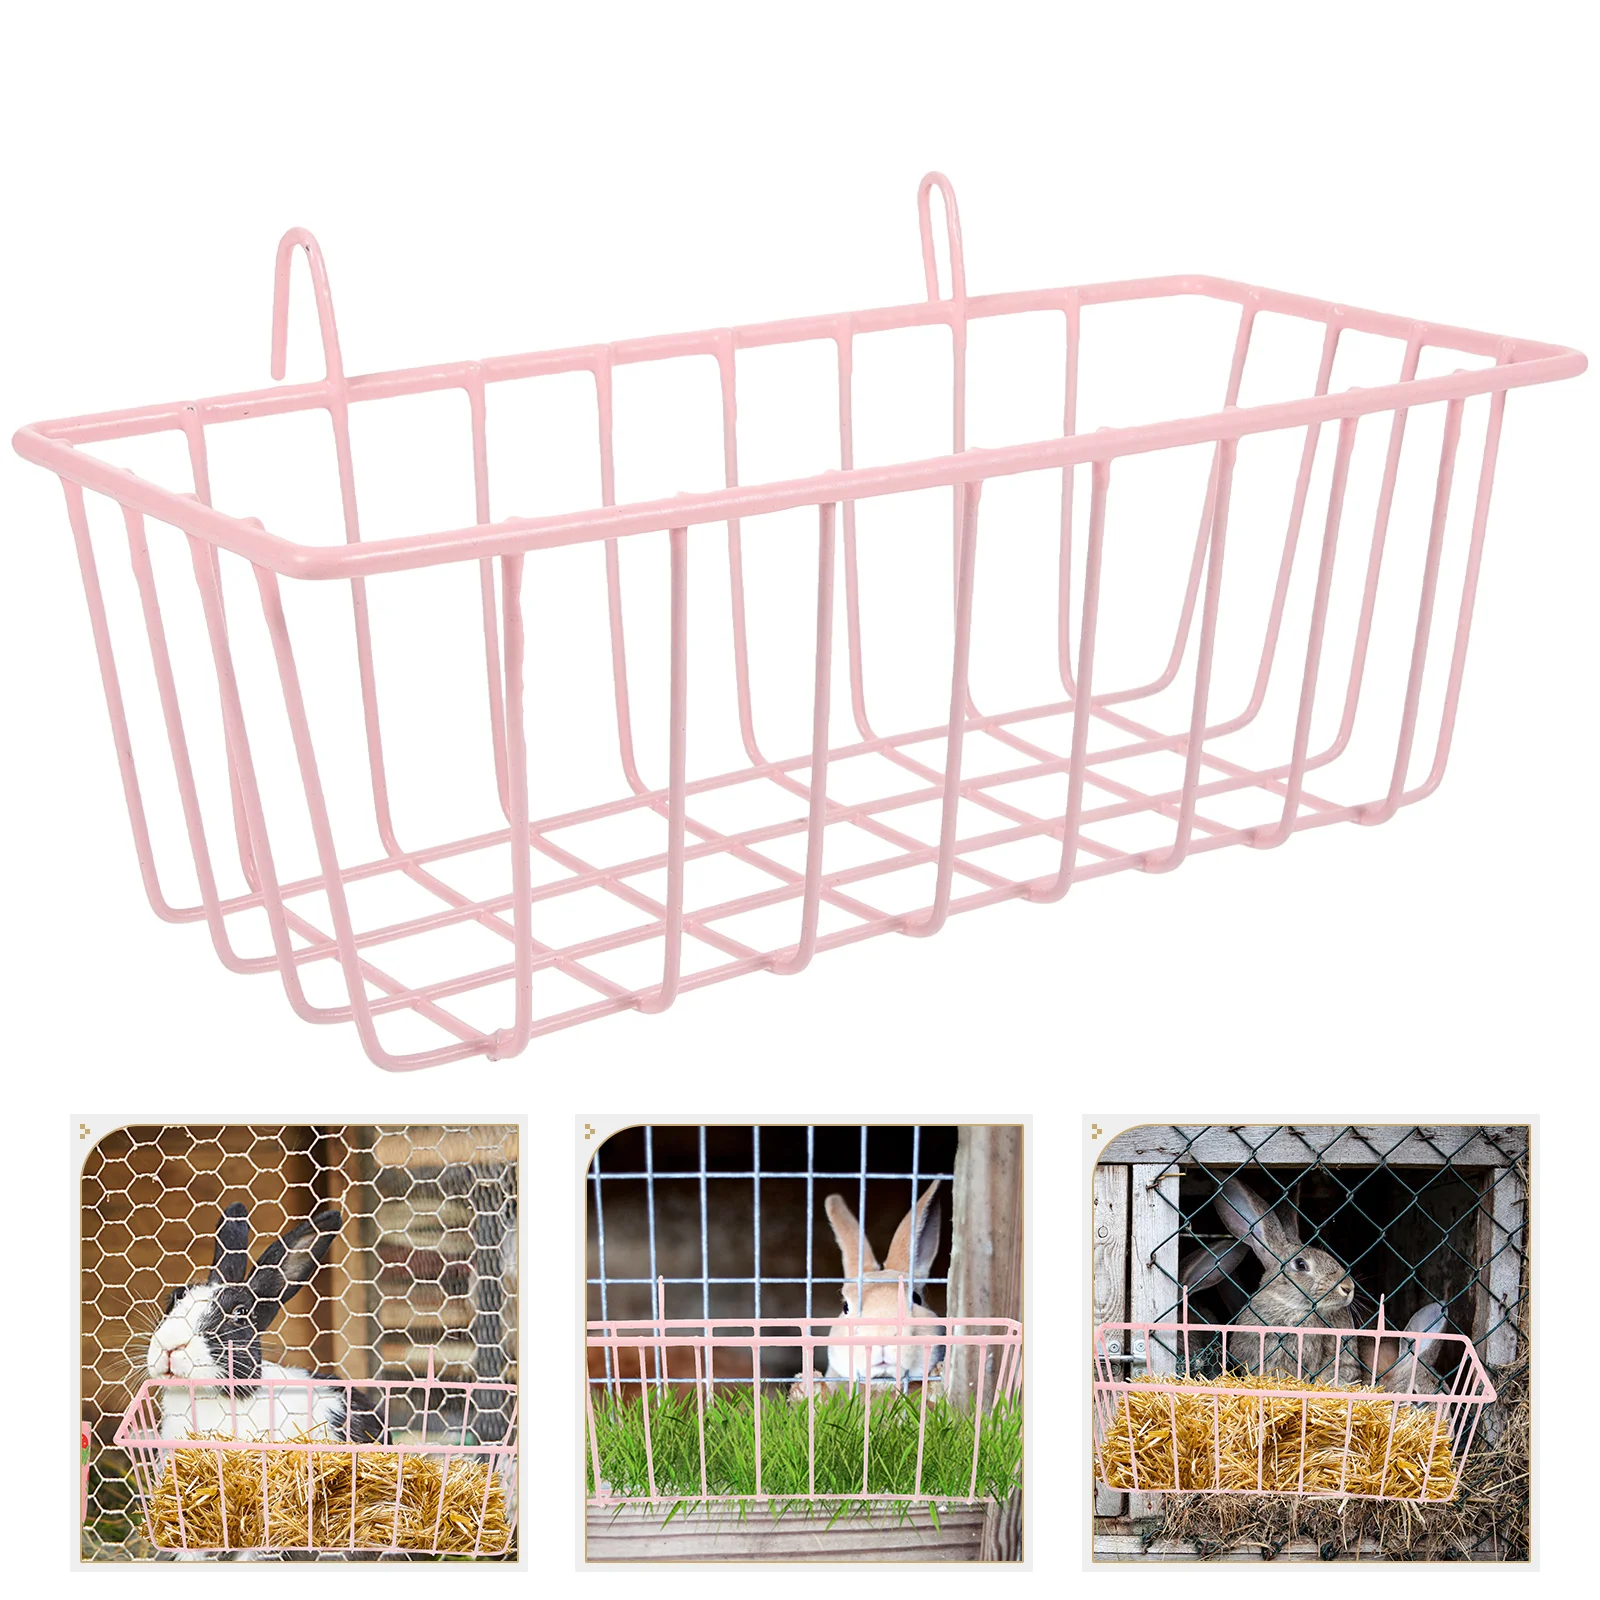 Iepure Fân Alimentator Agățat Fân Alimentator Convenabil Bunny Alimentator Iepure Accesoriu Bunny Fân Alimentator Cușcă De Iepure Fân Rack Imagine 5